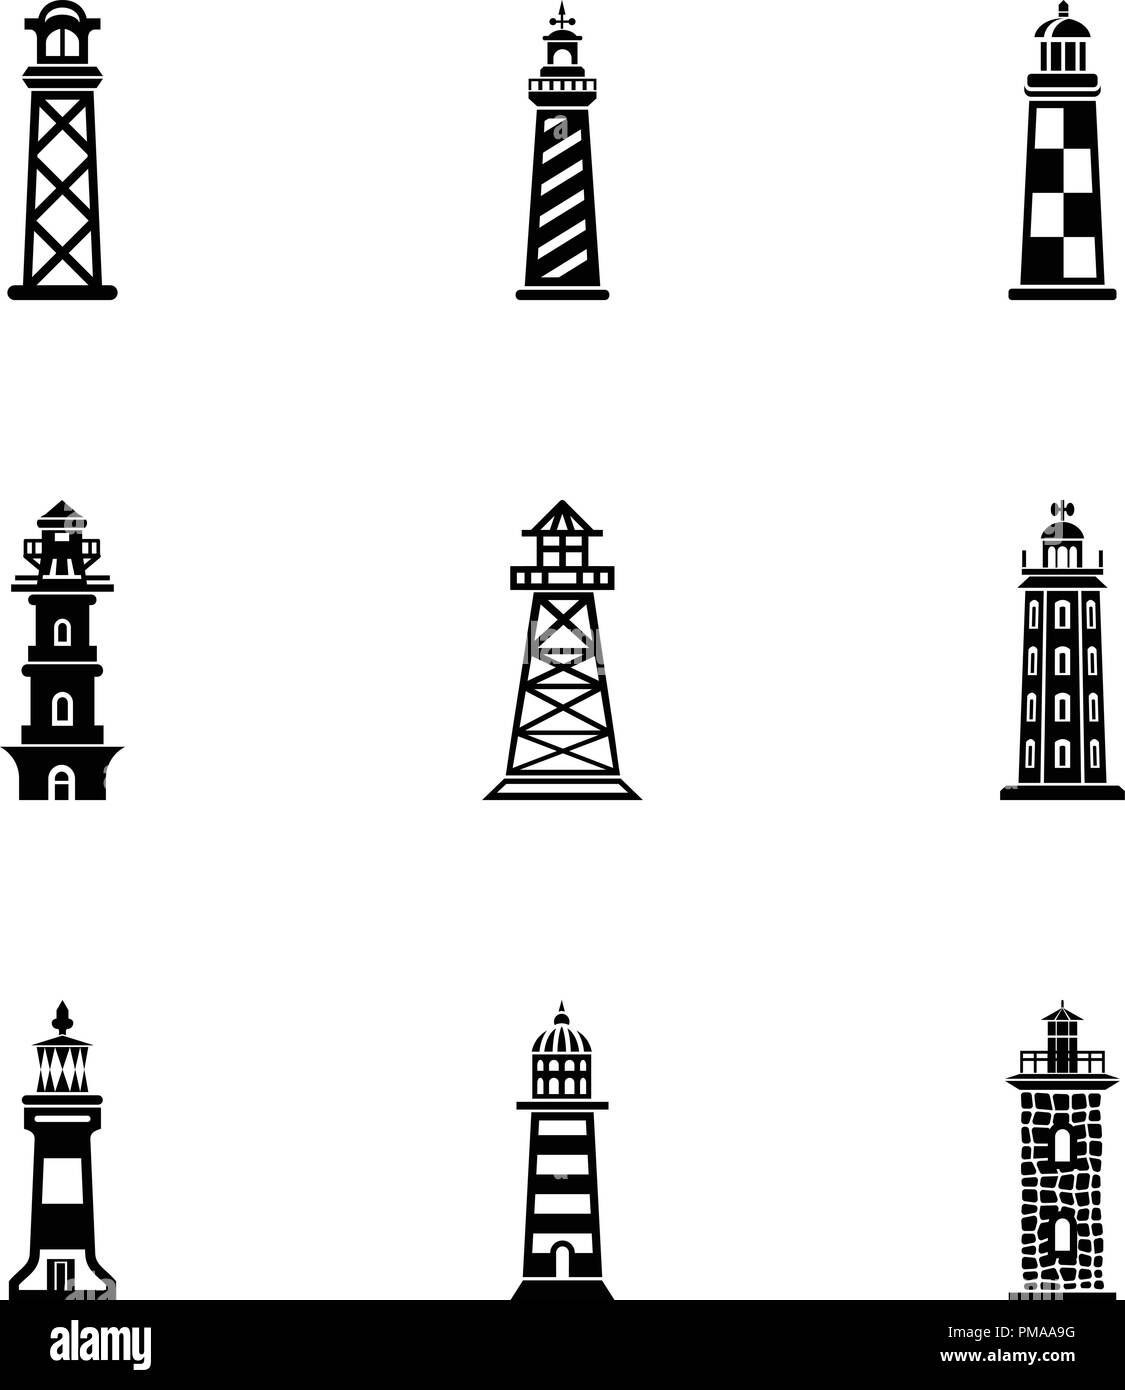 Leuchtturm Symbole Gesetzt Einfachen Stil Stock Vektorgrafik Alamy